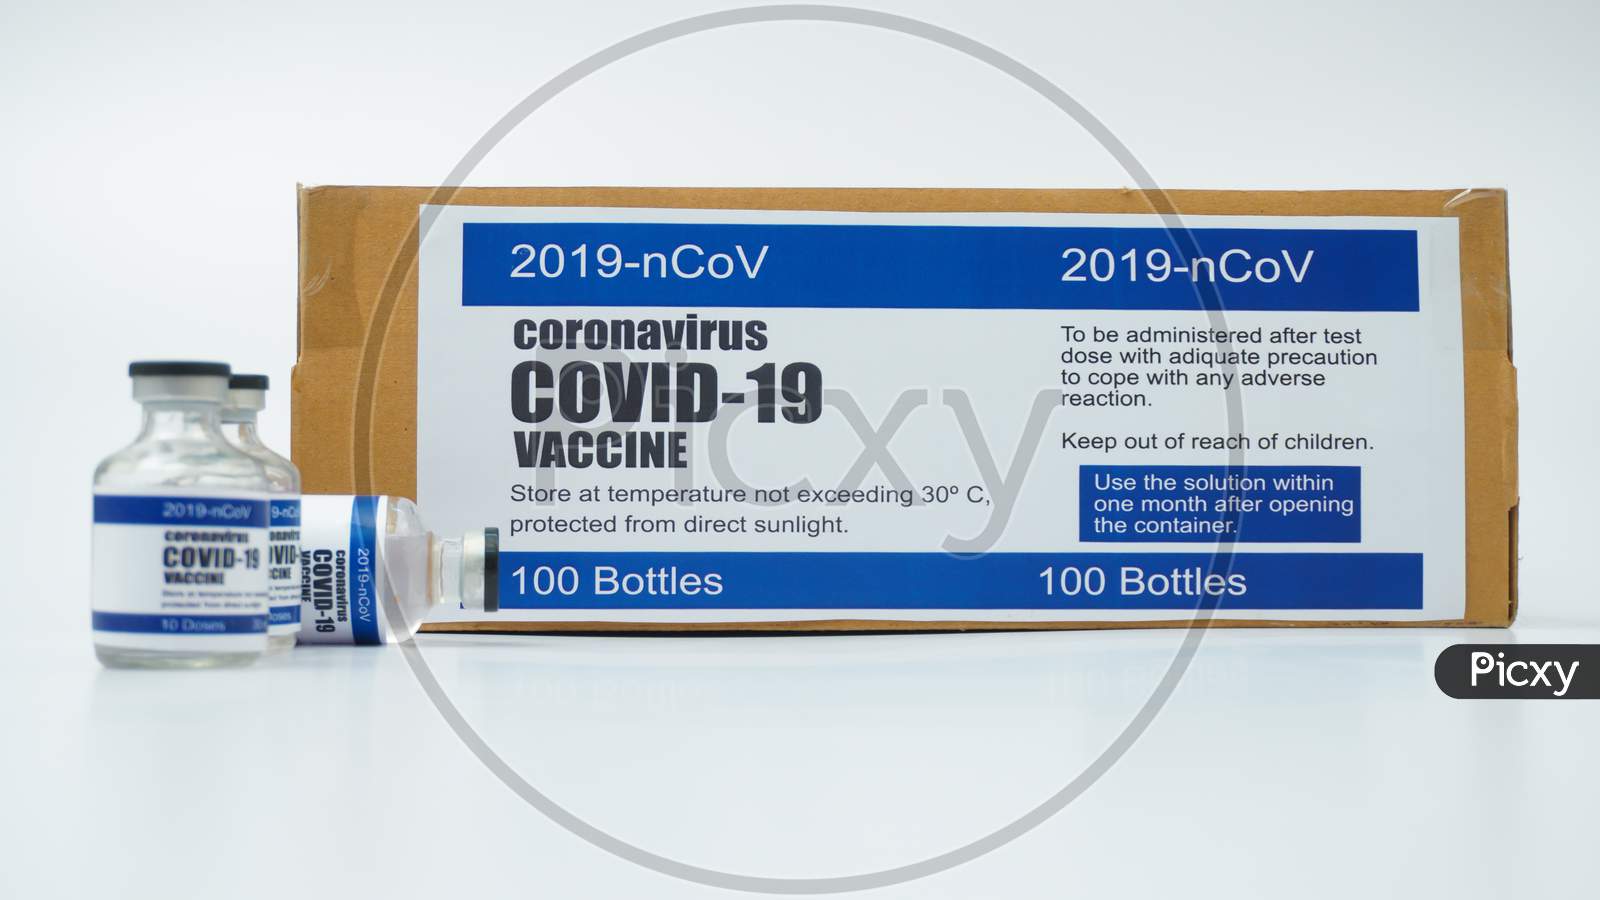 Covid-19 Corona Virus 2019-Ncov Vaccine Vials Medicine Drug Bottles Syringe Injection Box. Vaccination, Immunization, Treatment To Cure Covid 19 Corona Virus Infection. Medical Concept.